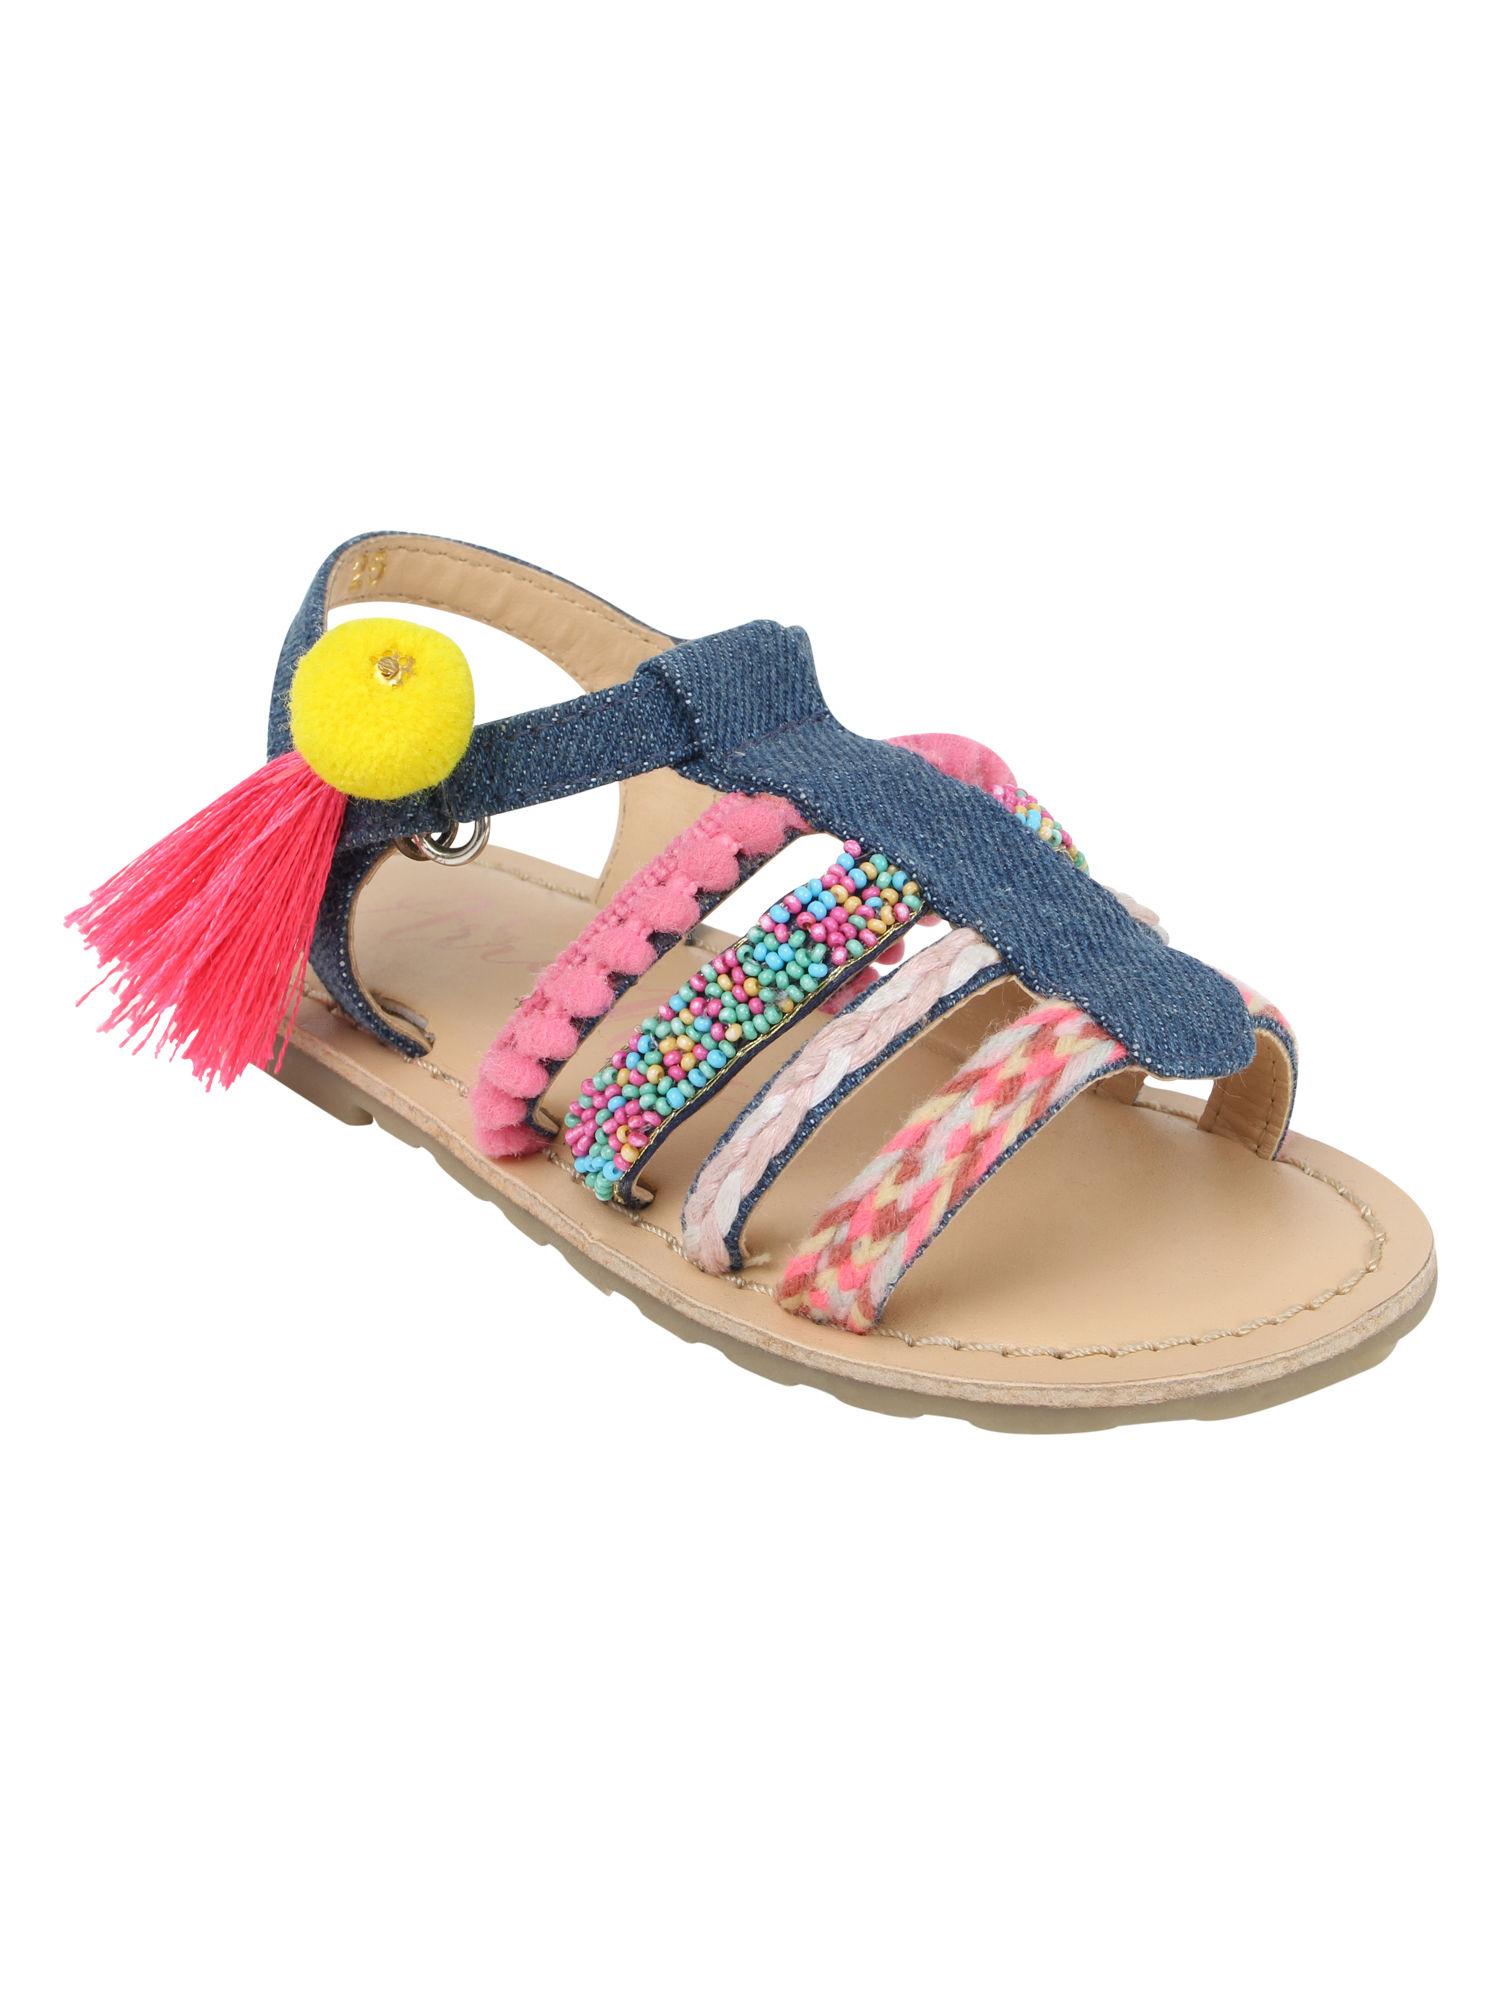 lola-pompom-tassel-embroidery-detailing-velcro-closure-sandals---navy